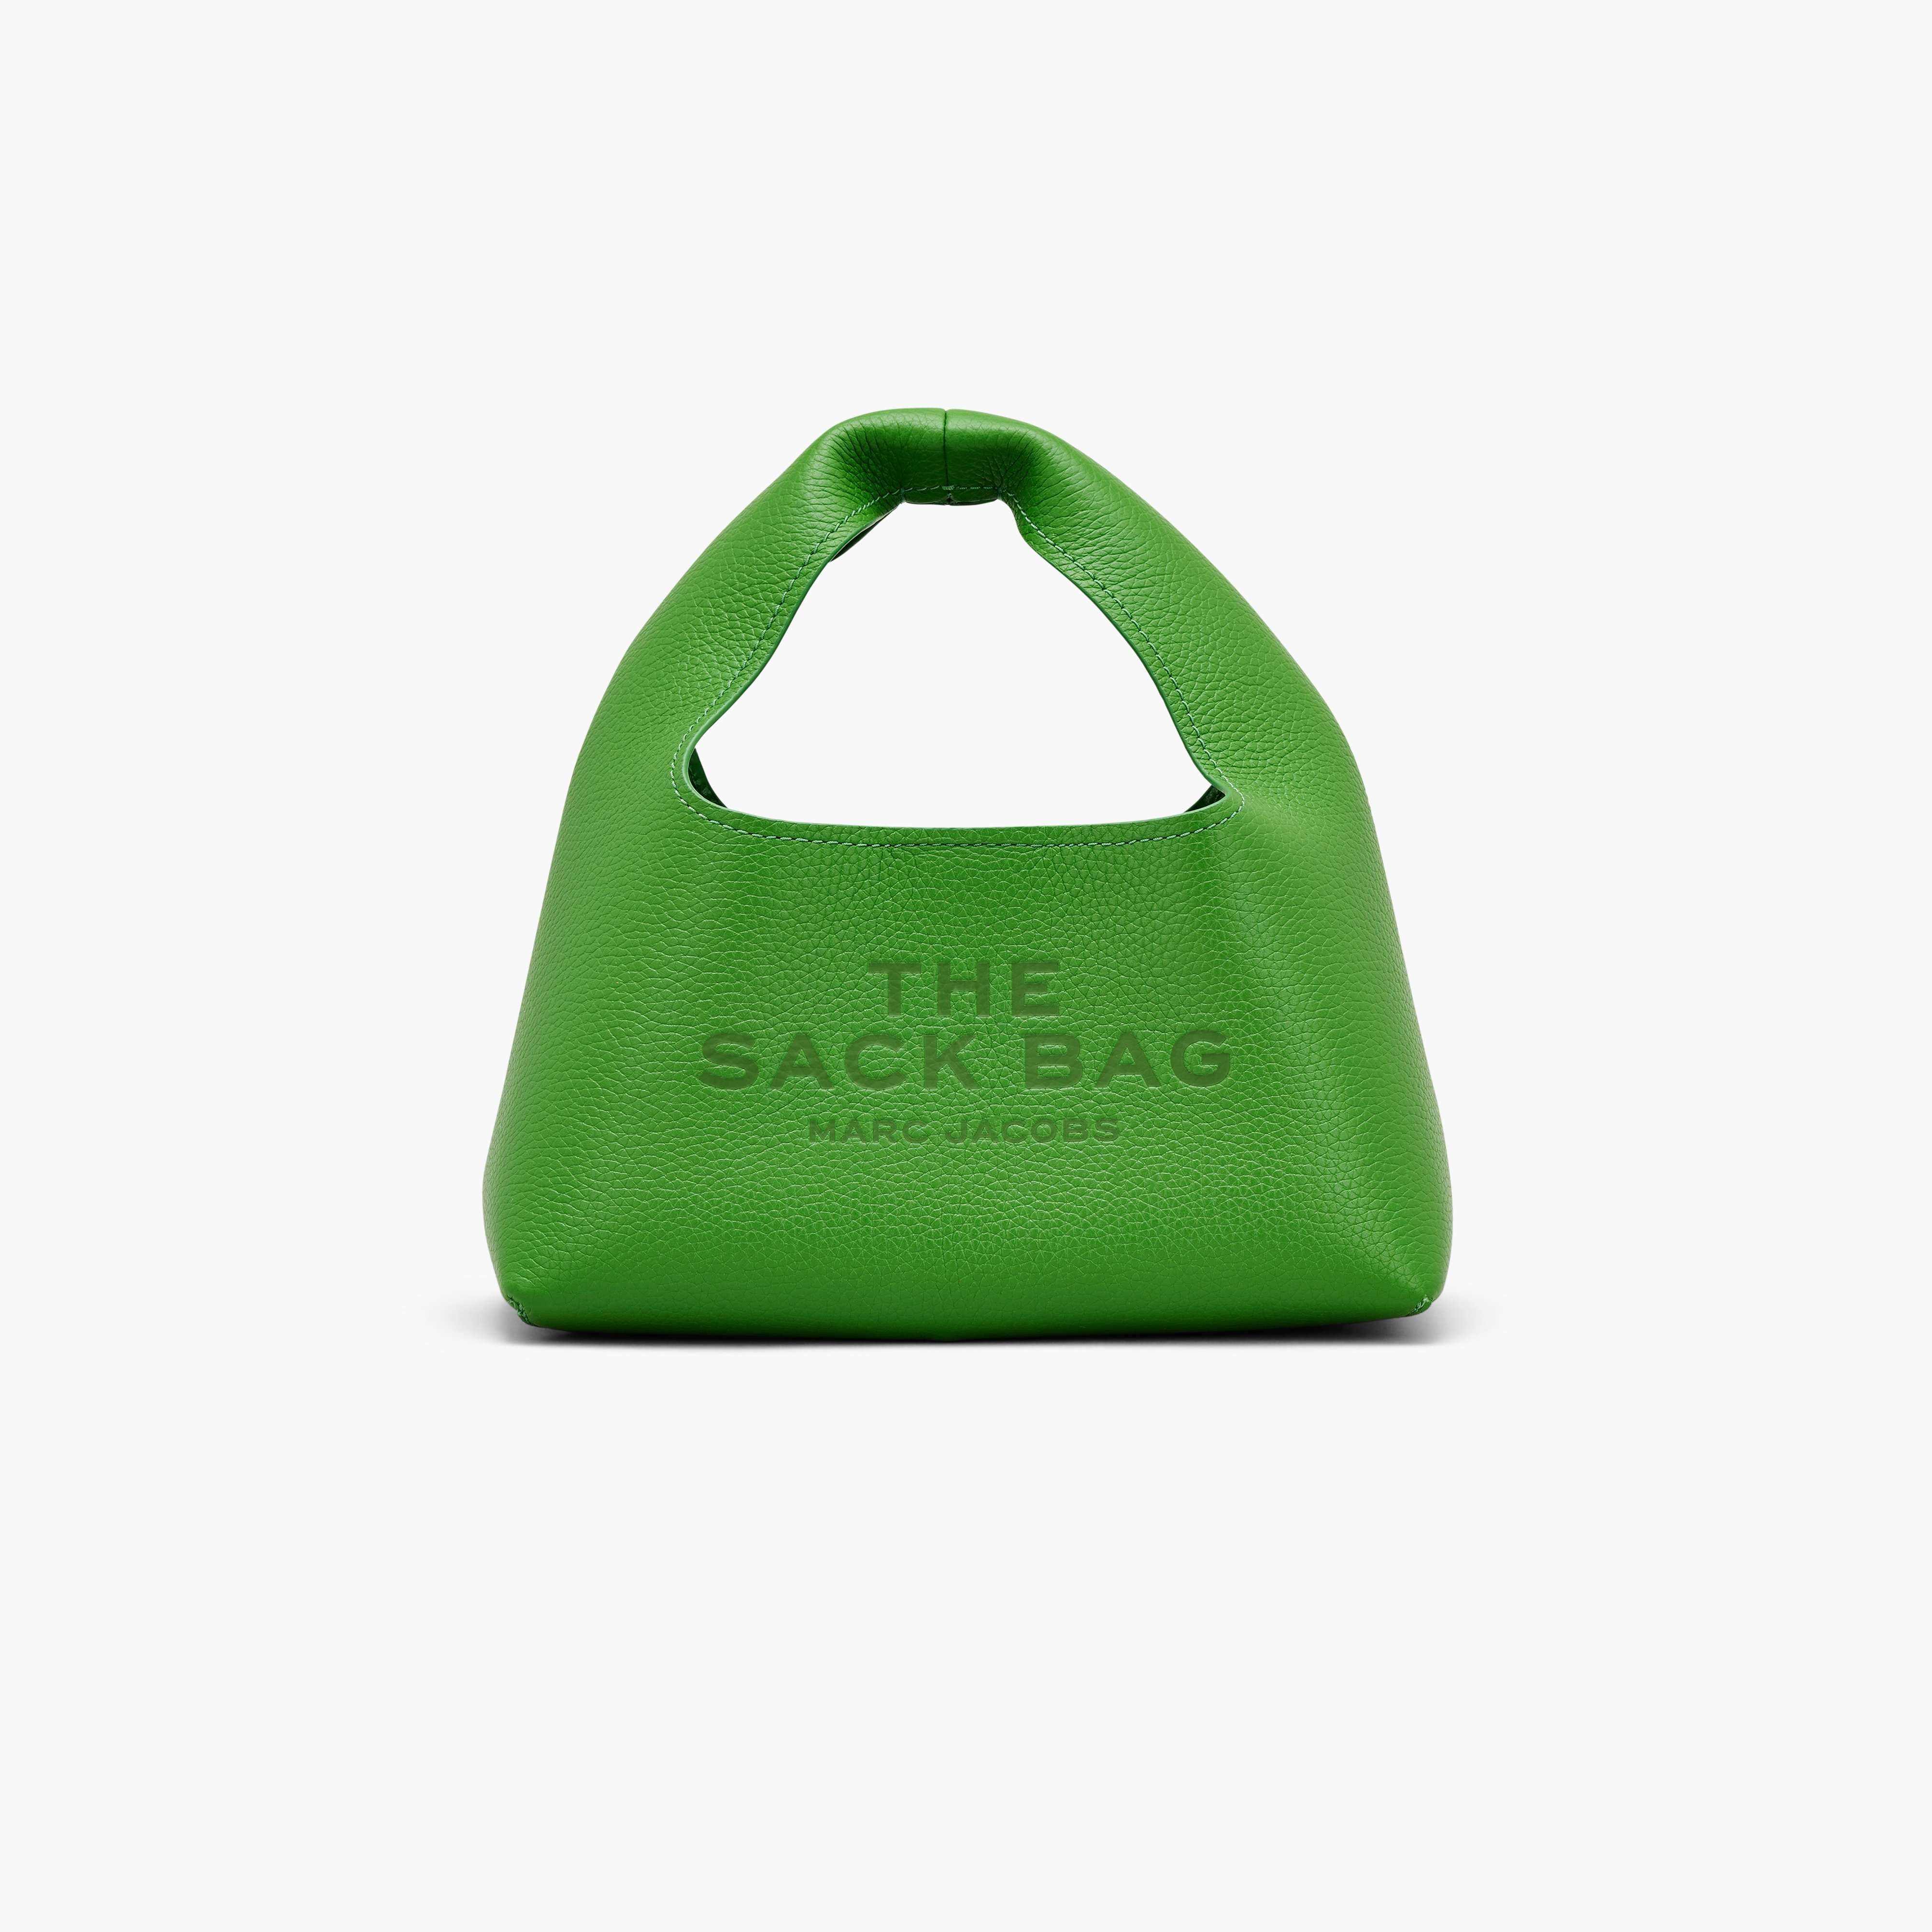 The Mini Sack Bag in Kiwi